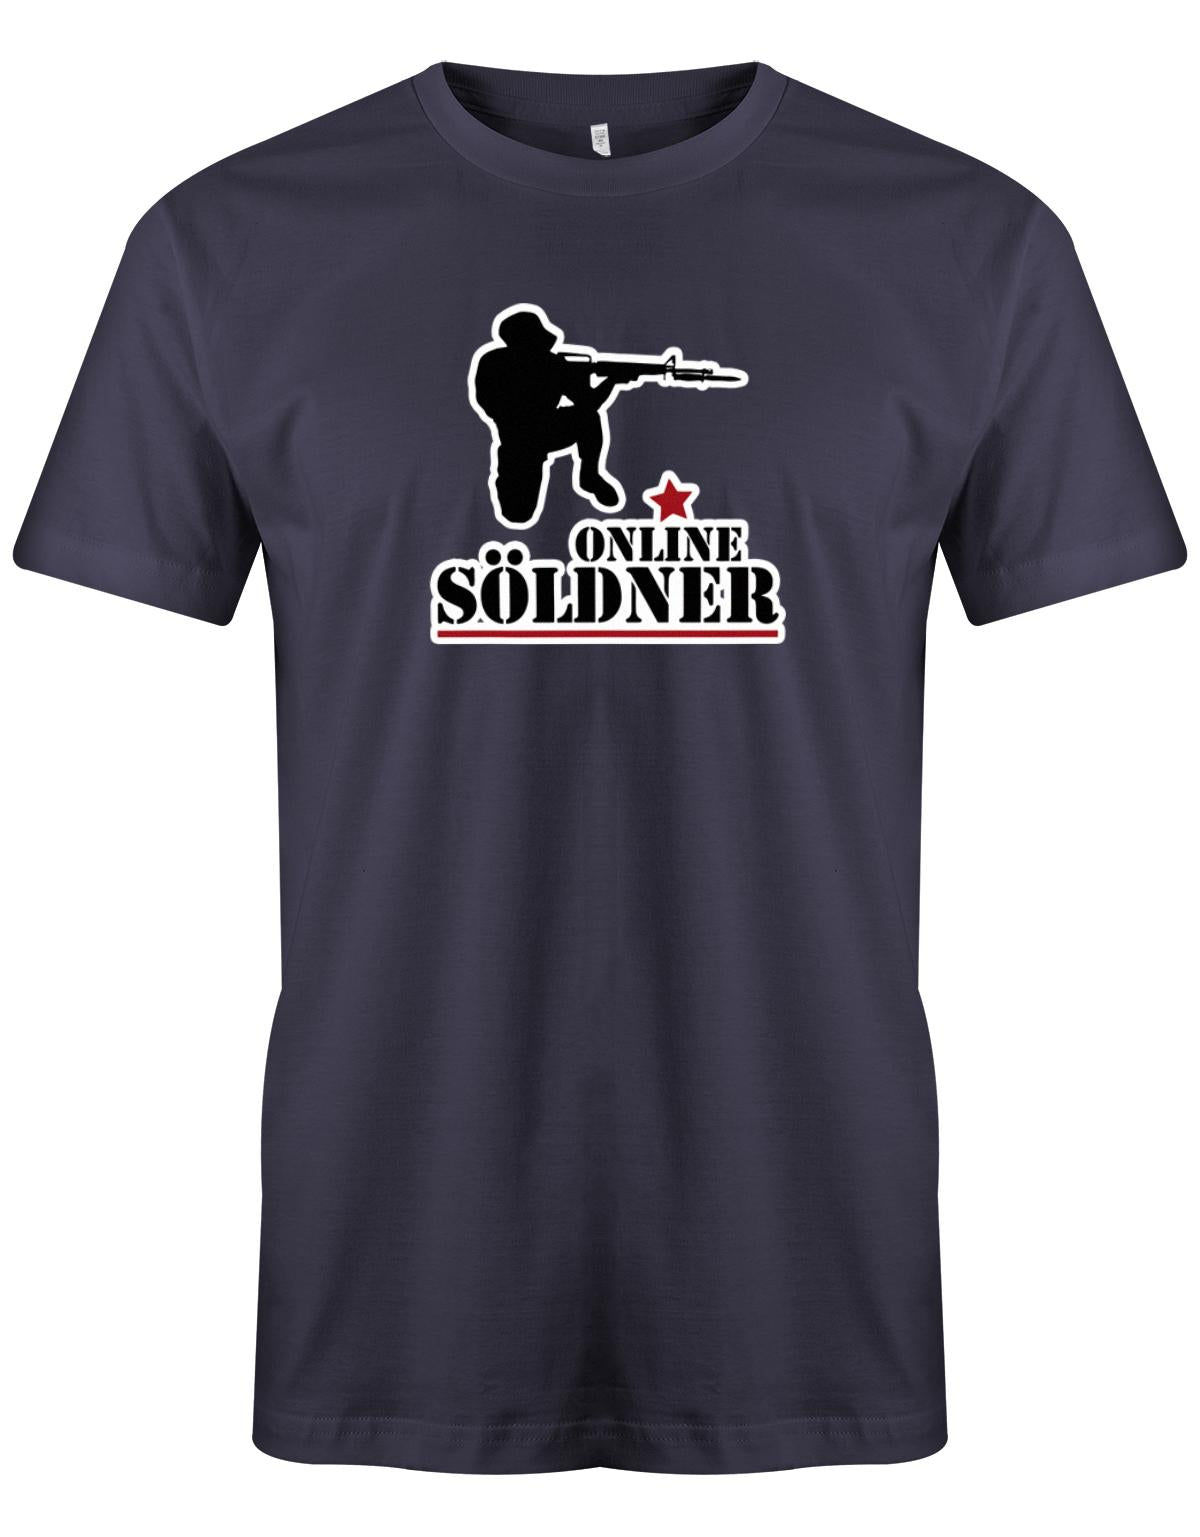 Online-S-ldner-Herren-Gamer-COD-Shirt-Navy